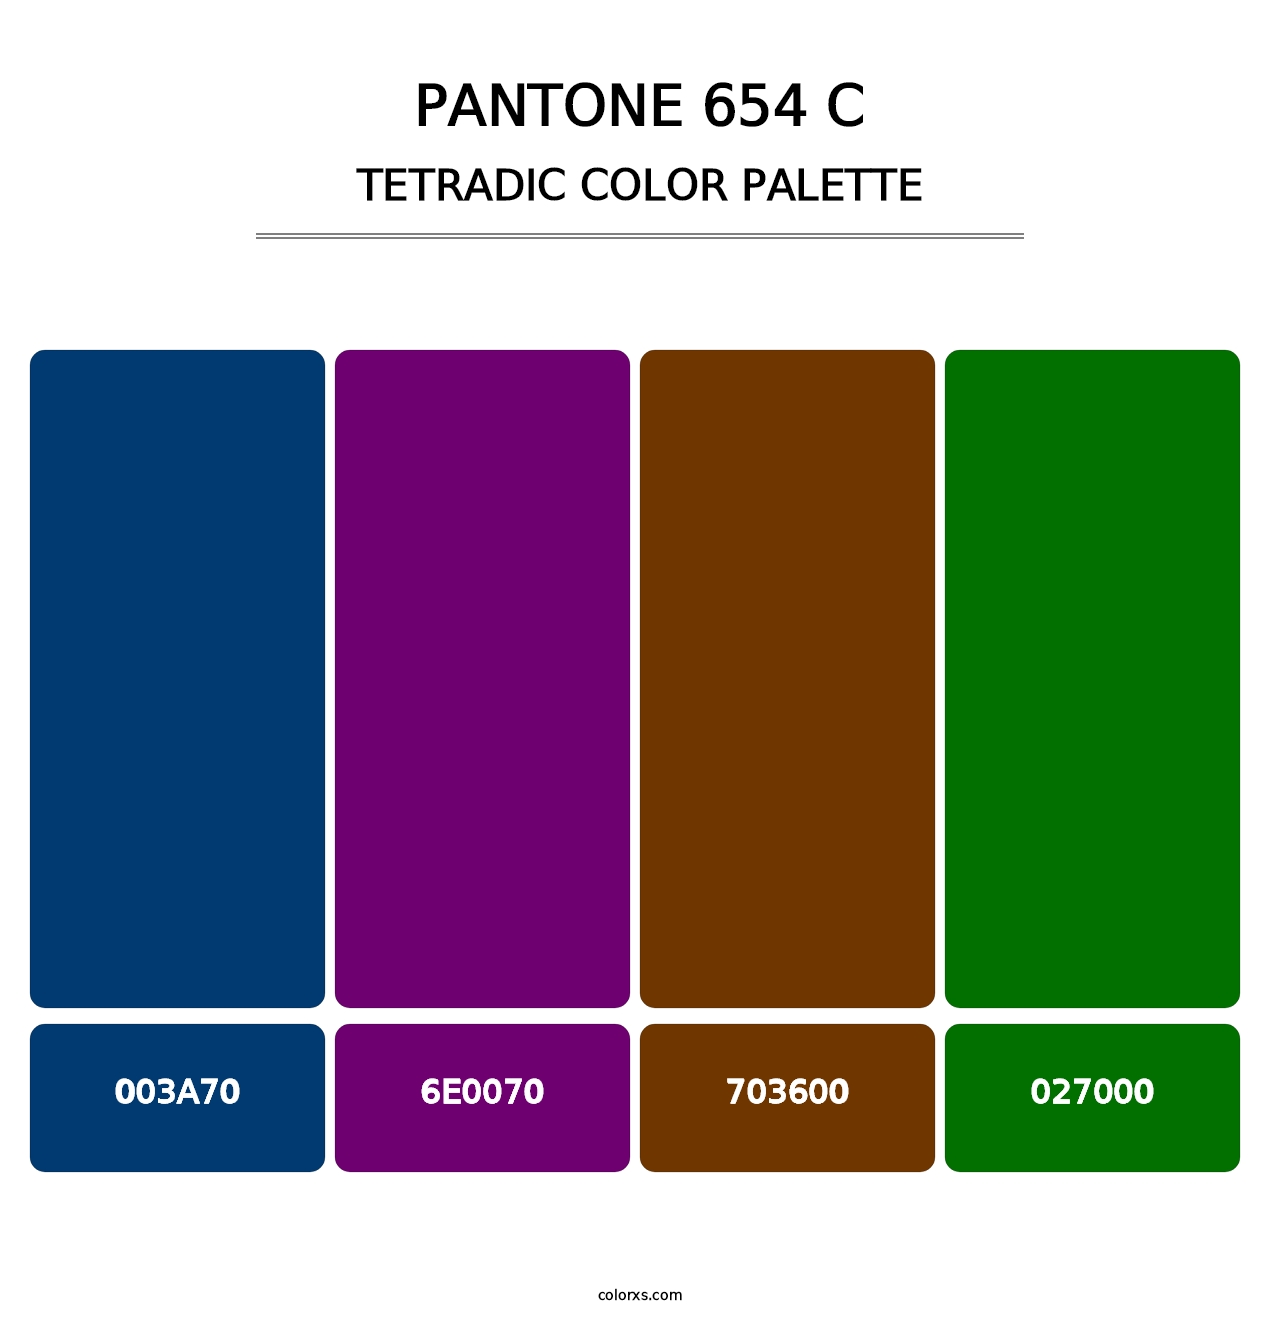 PANTONE 654 C - Tetradic Color Palette